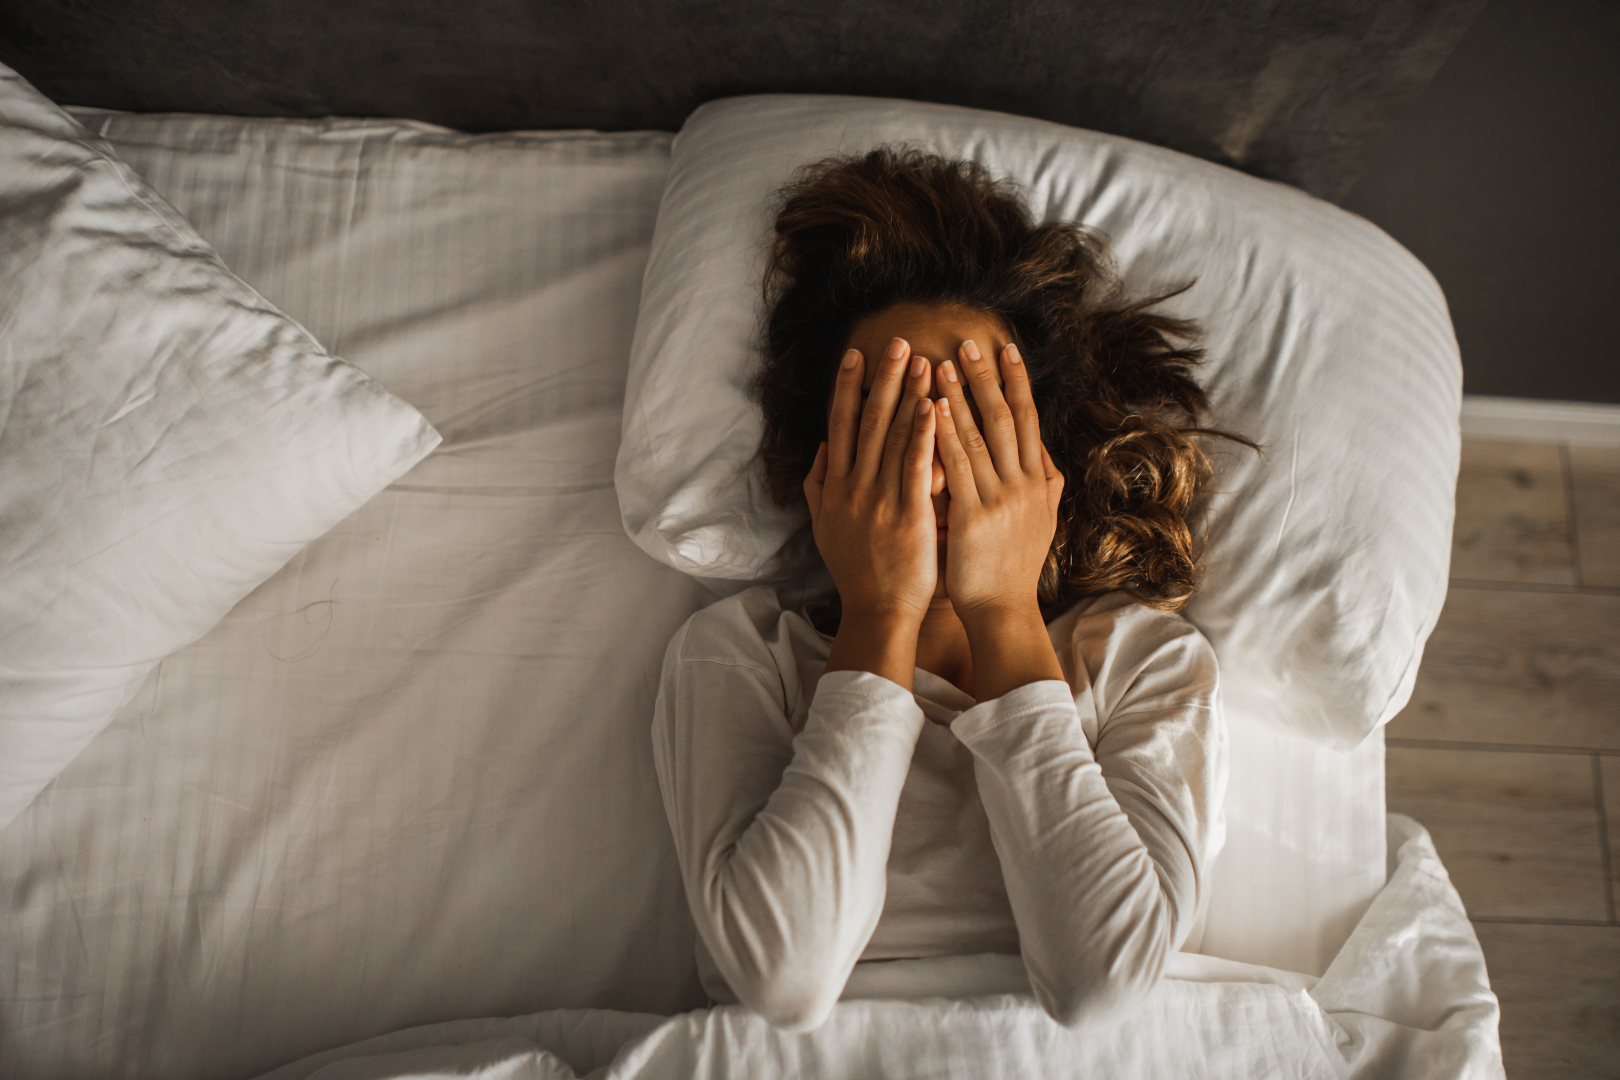 Irregular sleep patterns